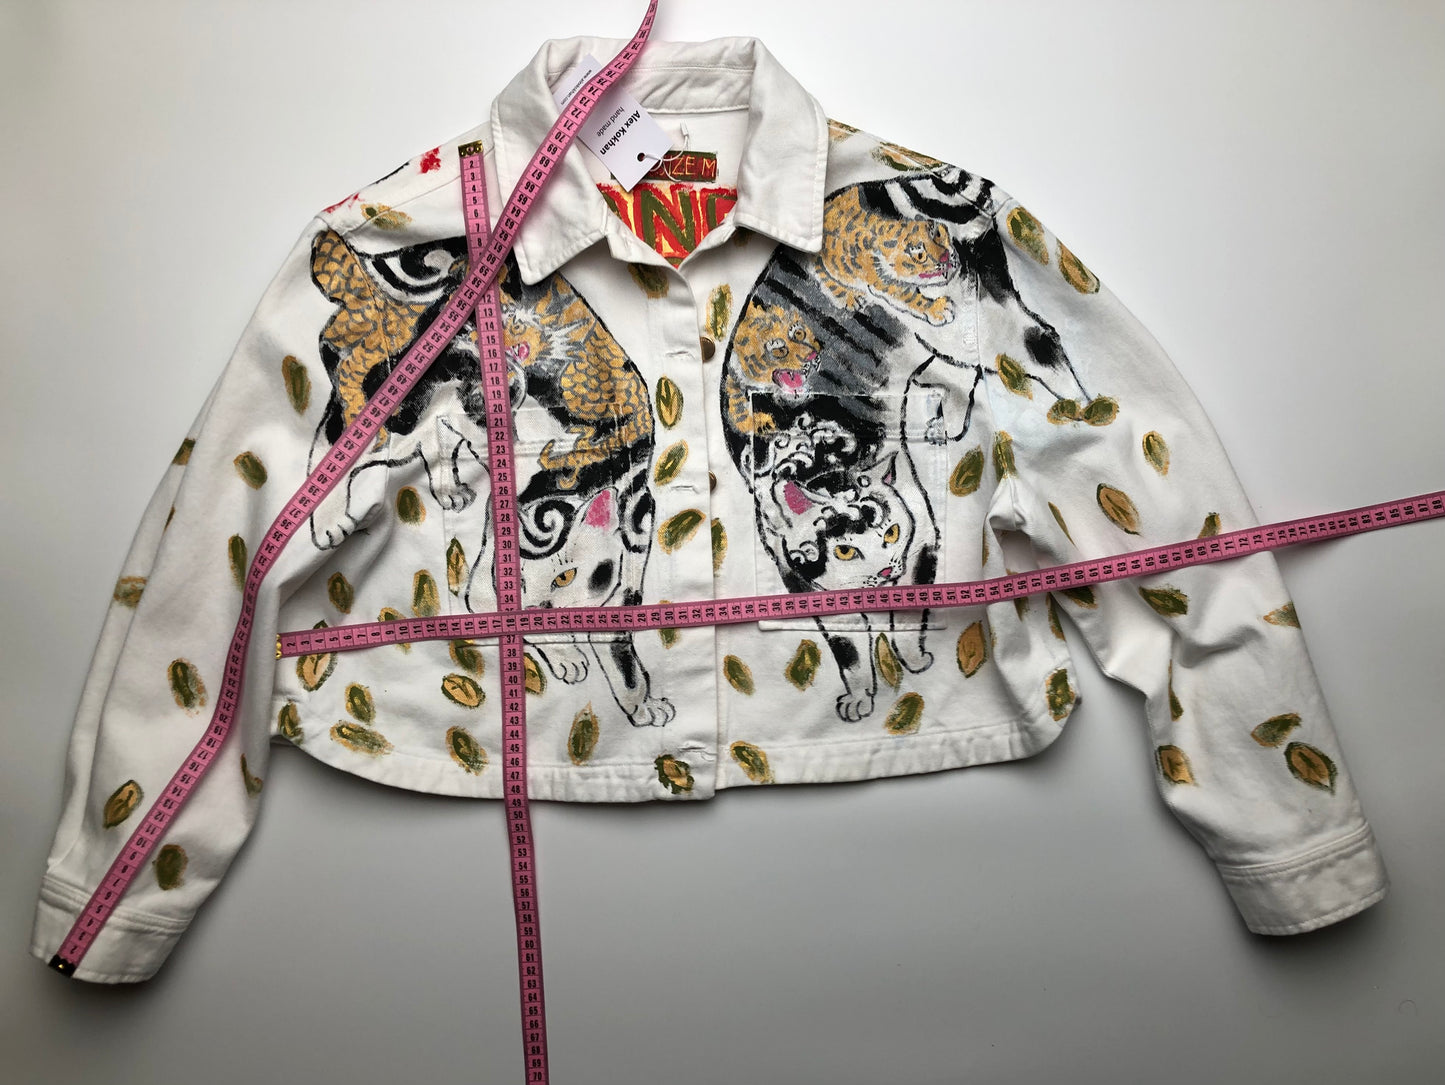 Handmade jacket in size M. Sleeve length 58 cm, height 49 cm, waist width 56 cm.